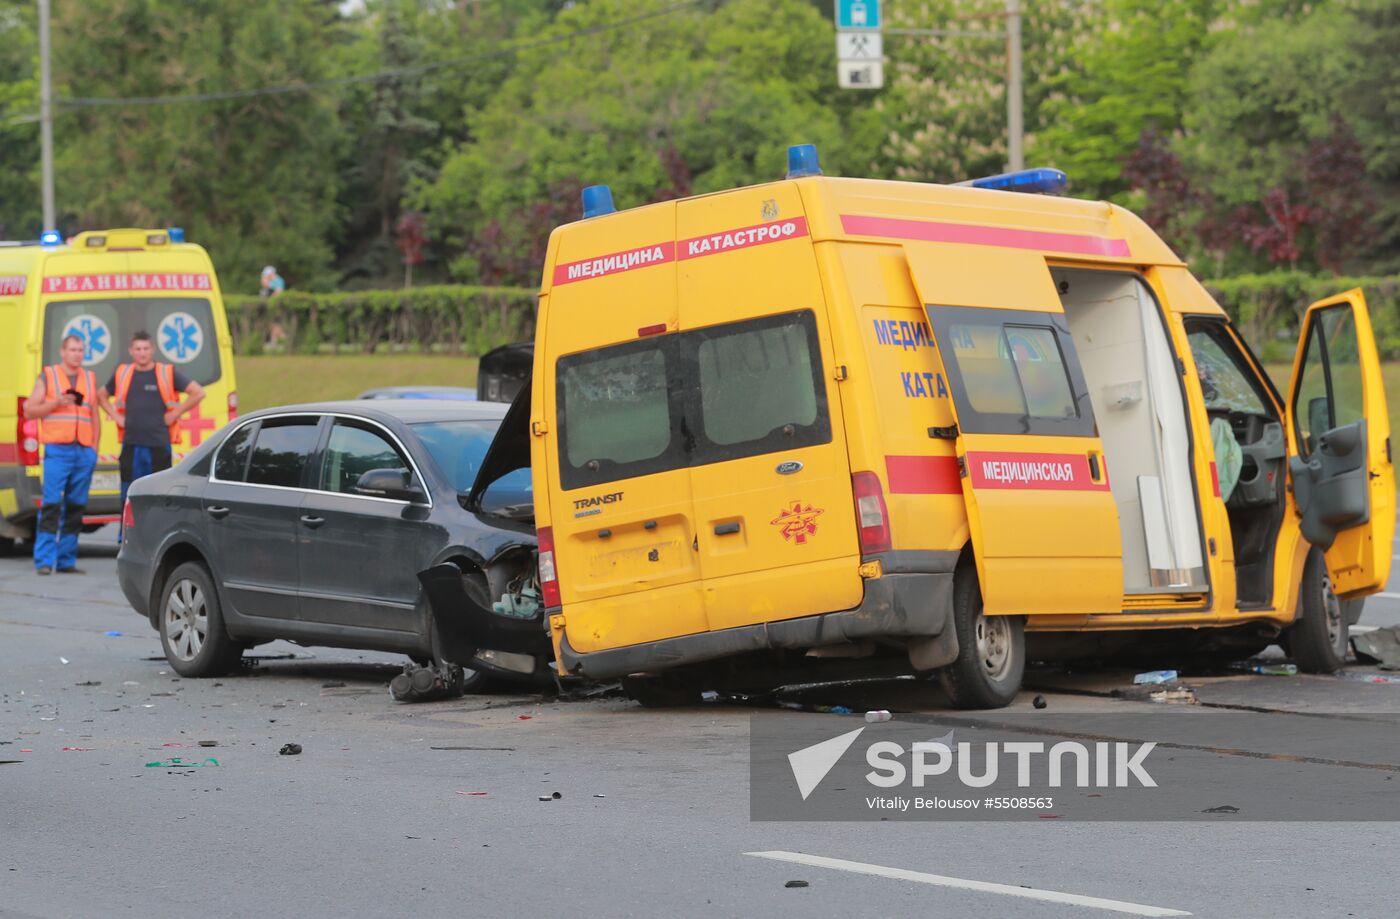 Car accident on Kutuzovsky Prospekt in Moscow